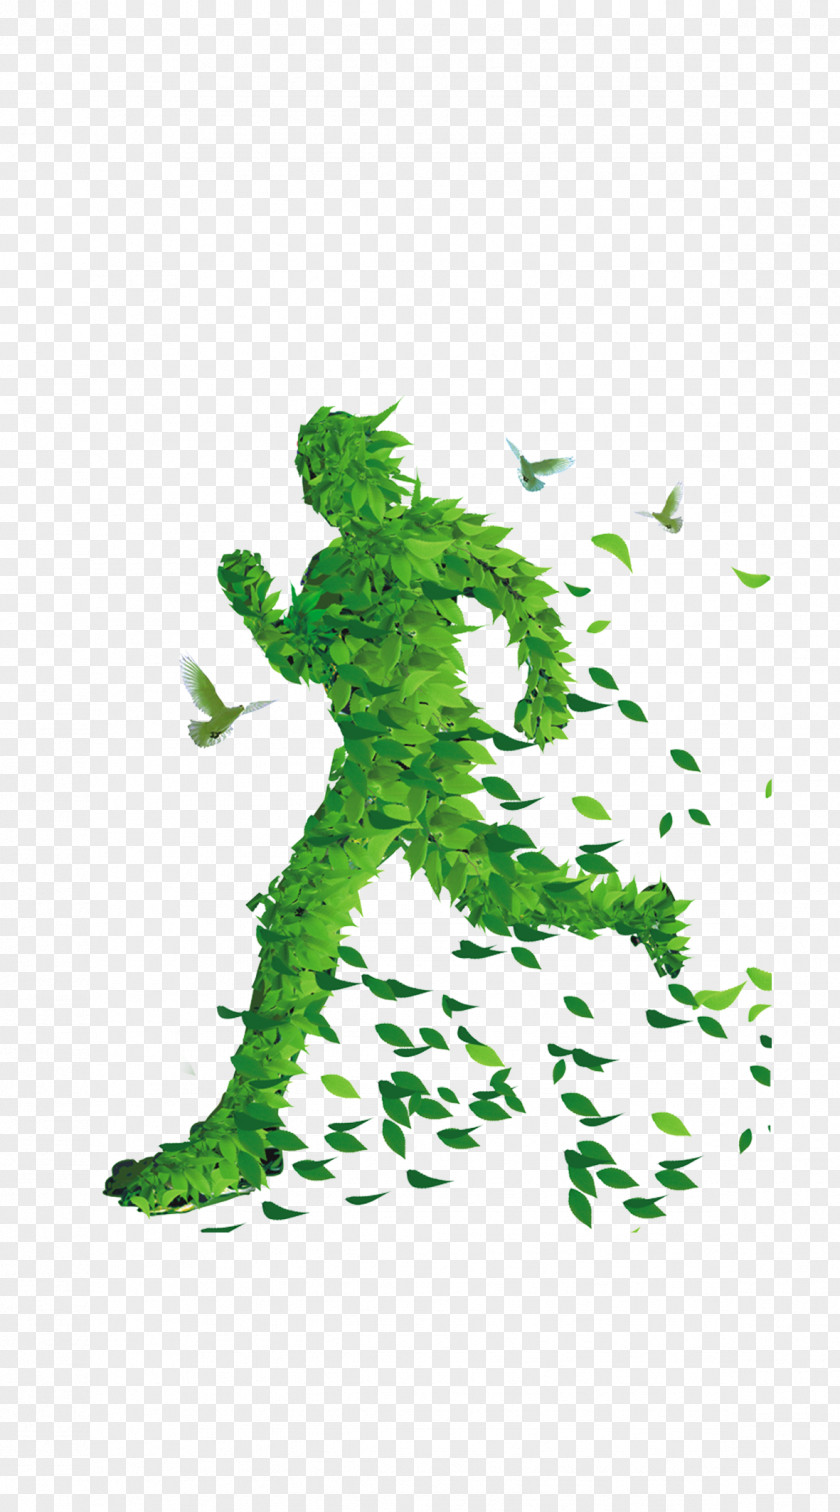 Green Man Running Poster PNG